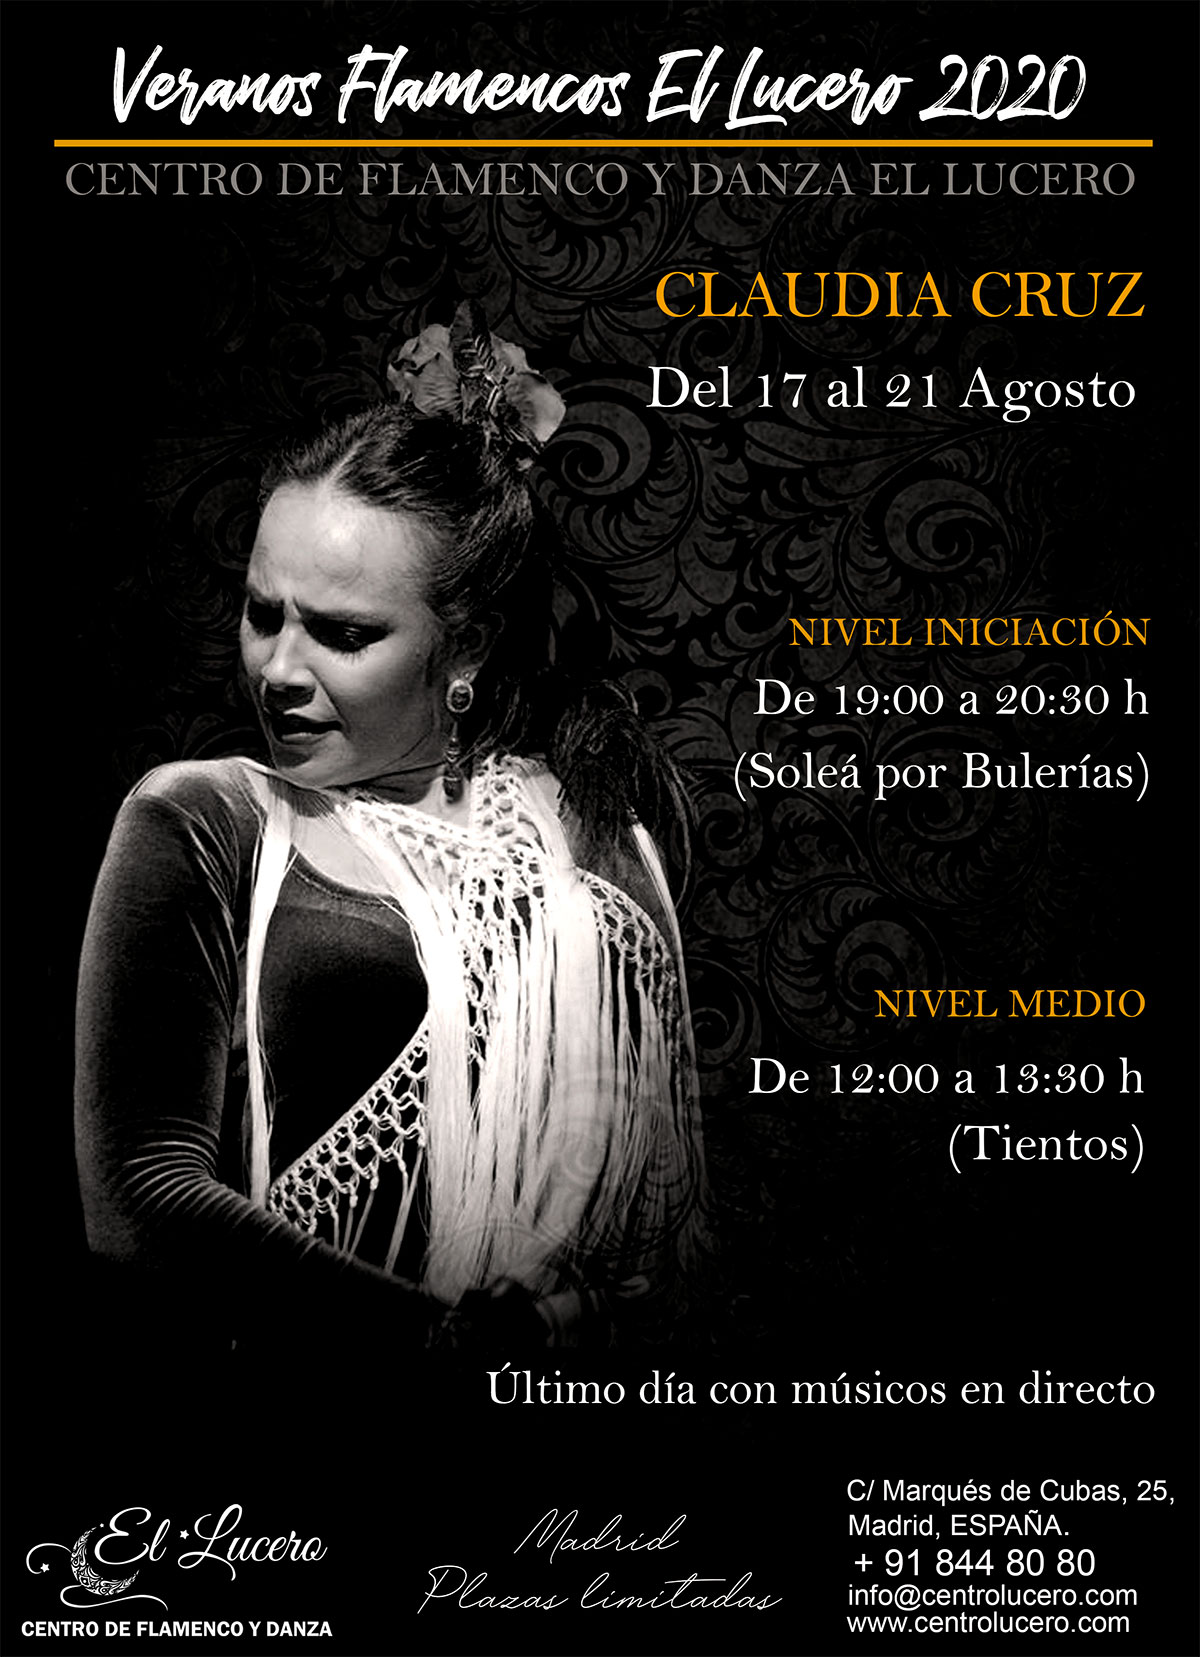 Veranos Flamencos EL LUCERO - Claudia Cruz